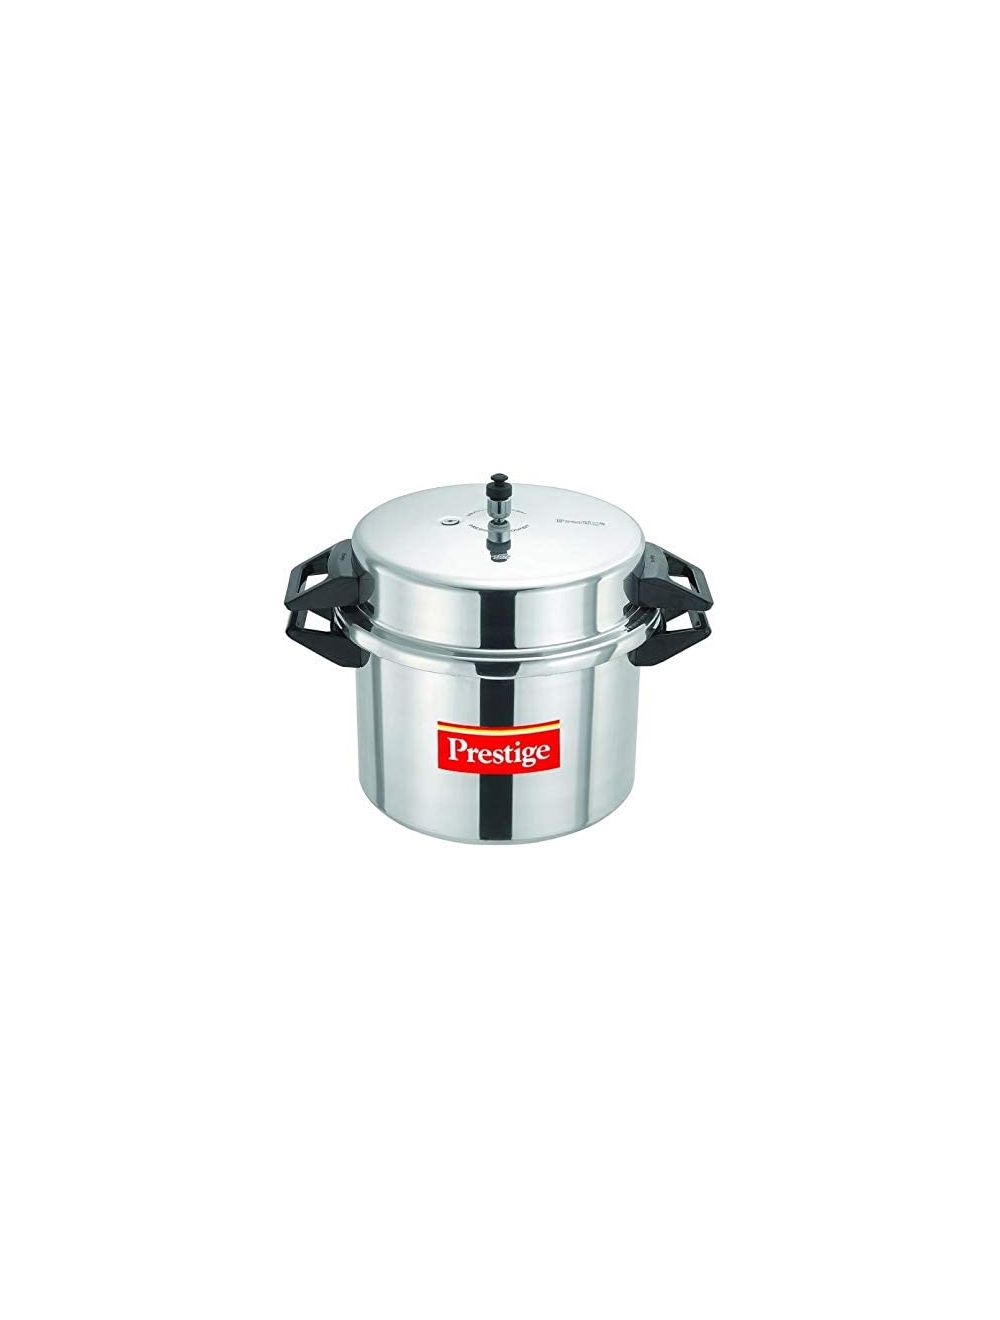 Prestige Aluminium 16.0 Ltr Pressure Cooker-MPD16000